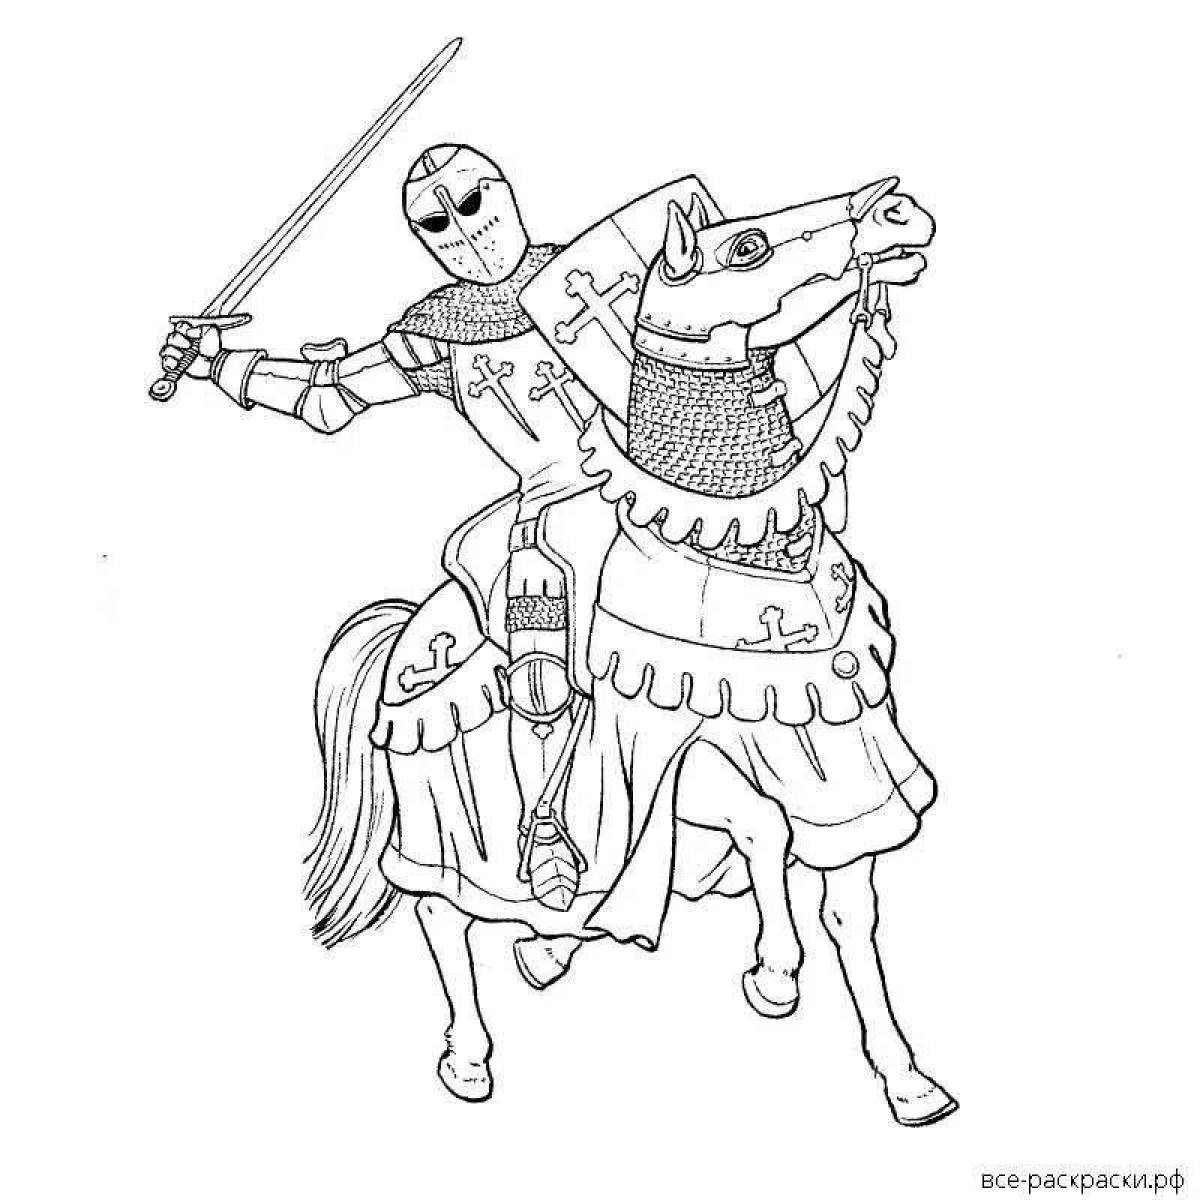 Luxury coloring book knight on horseback